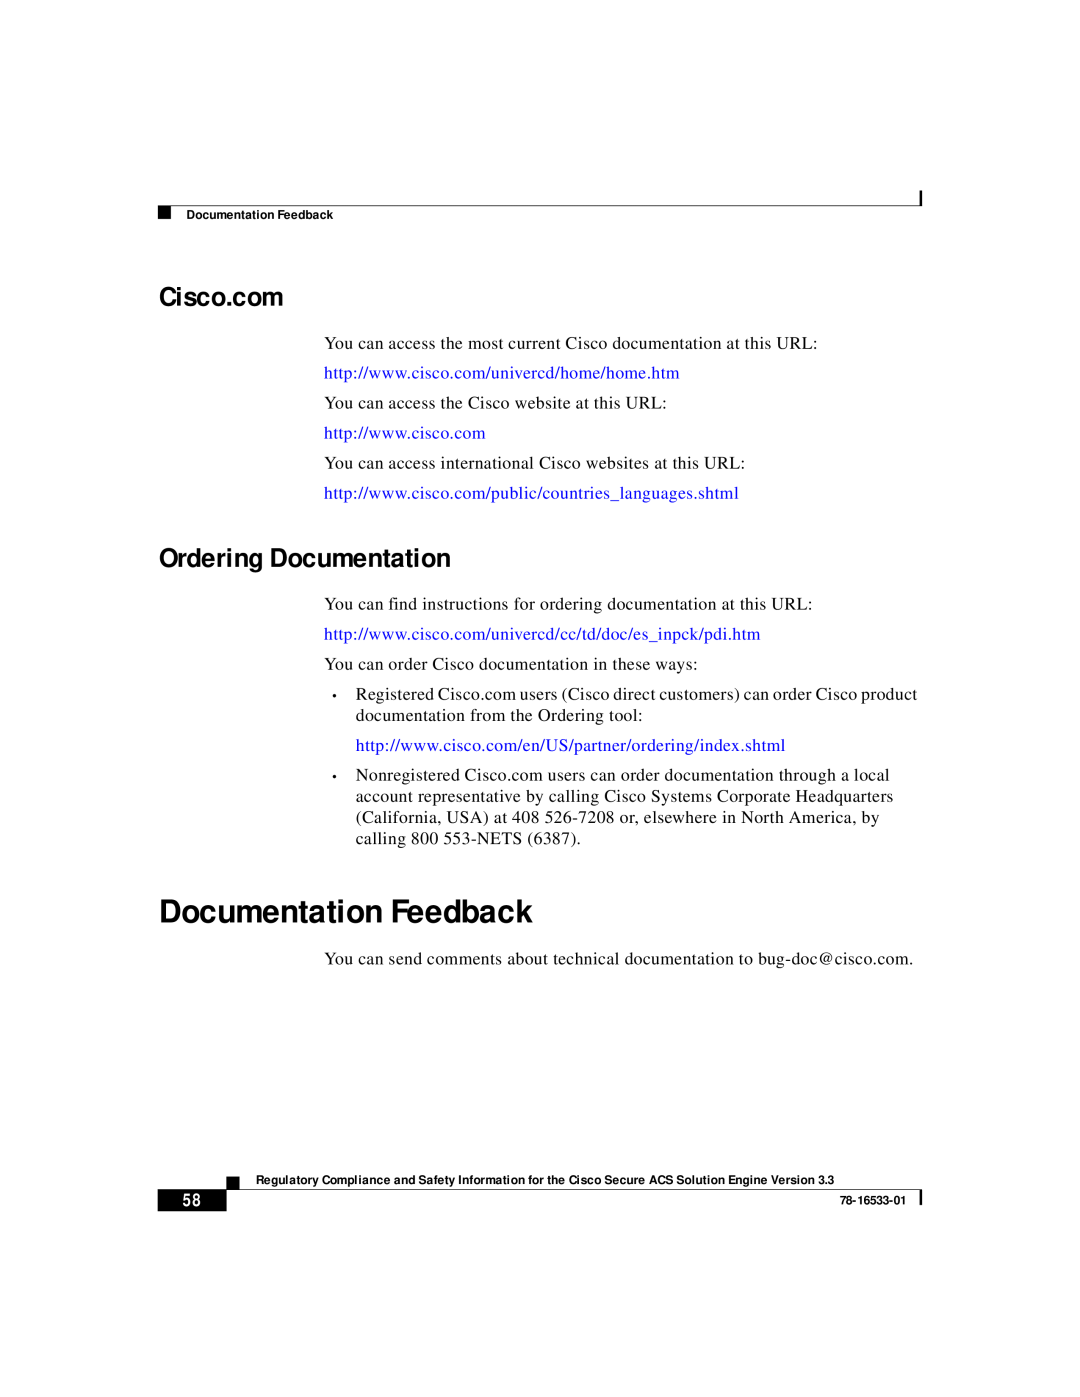 Cisco Systems CSACSE-1112-K9 manual Documentation Feedback, Cisco.com, Ordering Documentation 